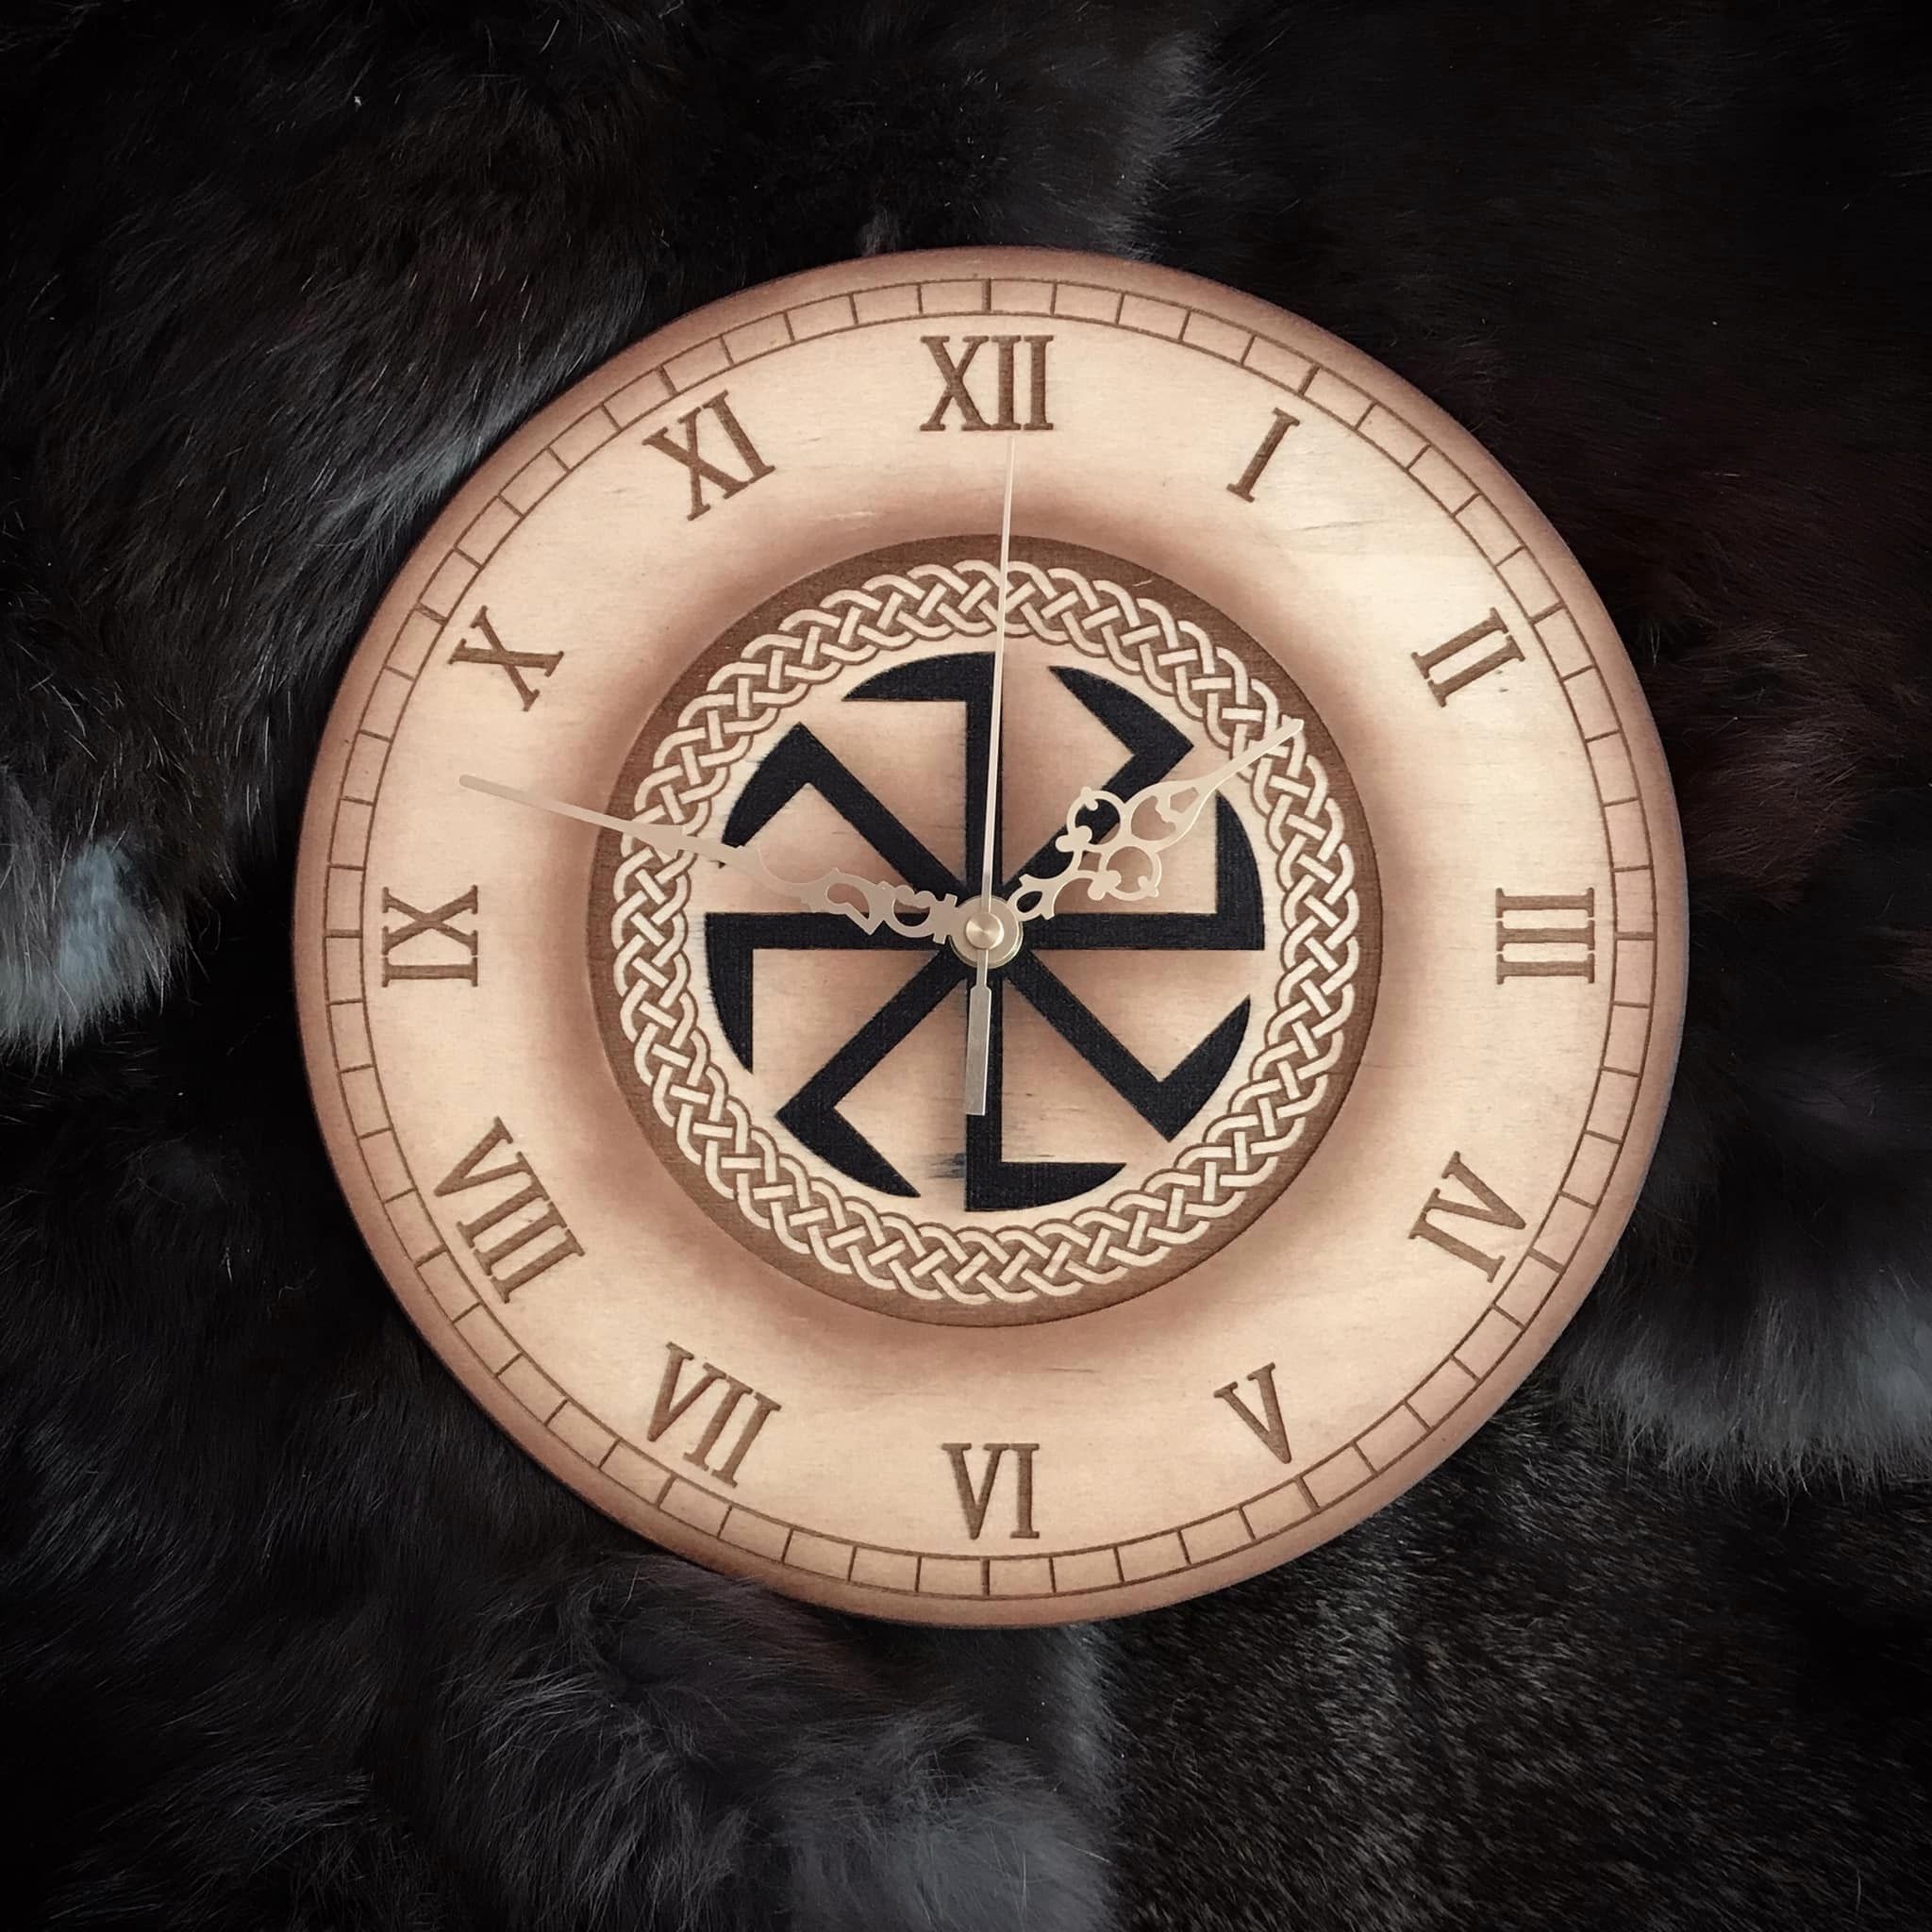 Ručne vyrobené drevené hodiny so slovanským symbolom - Kolovrat.